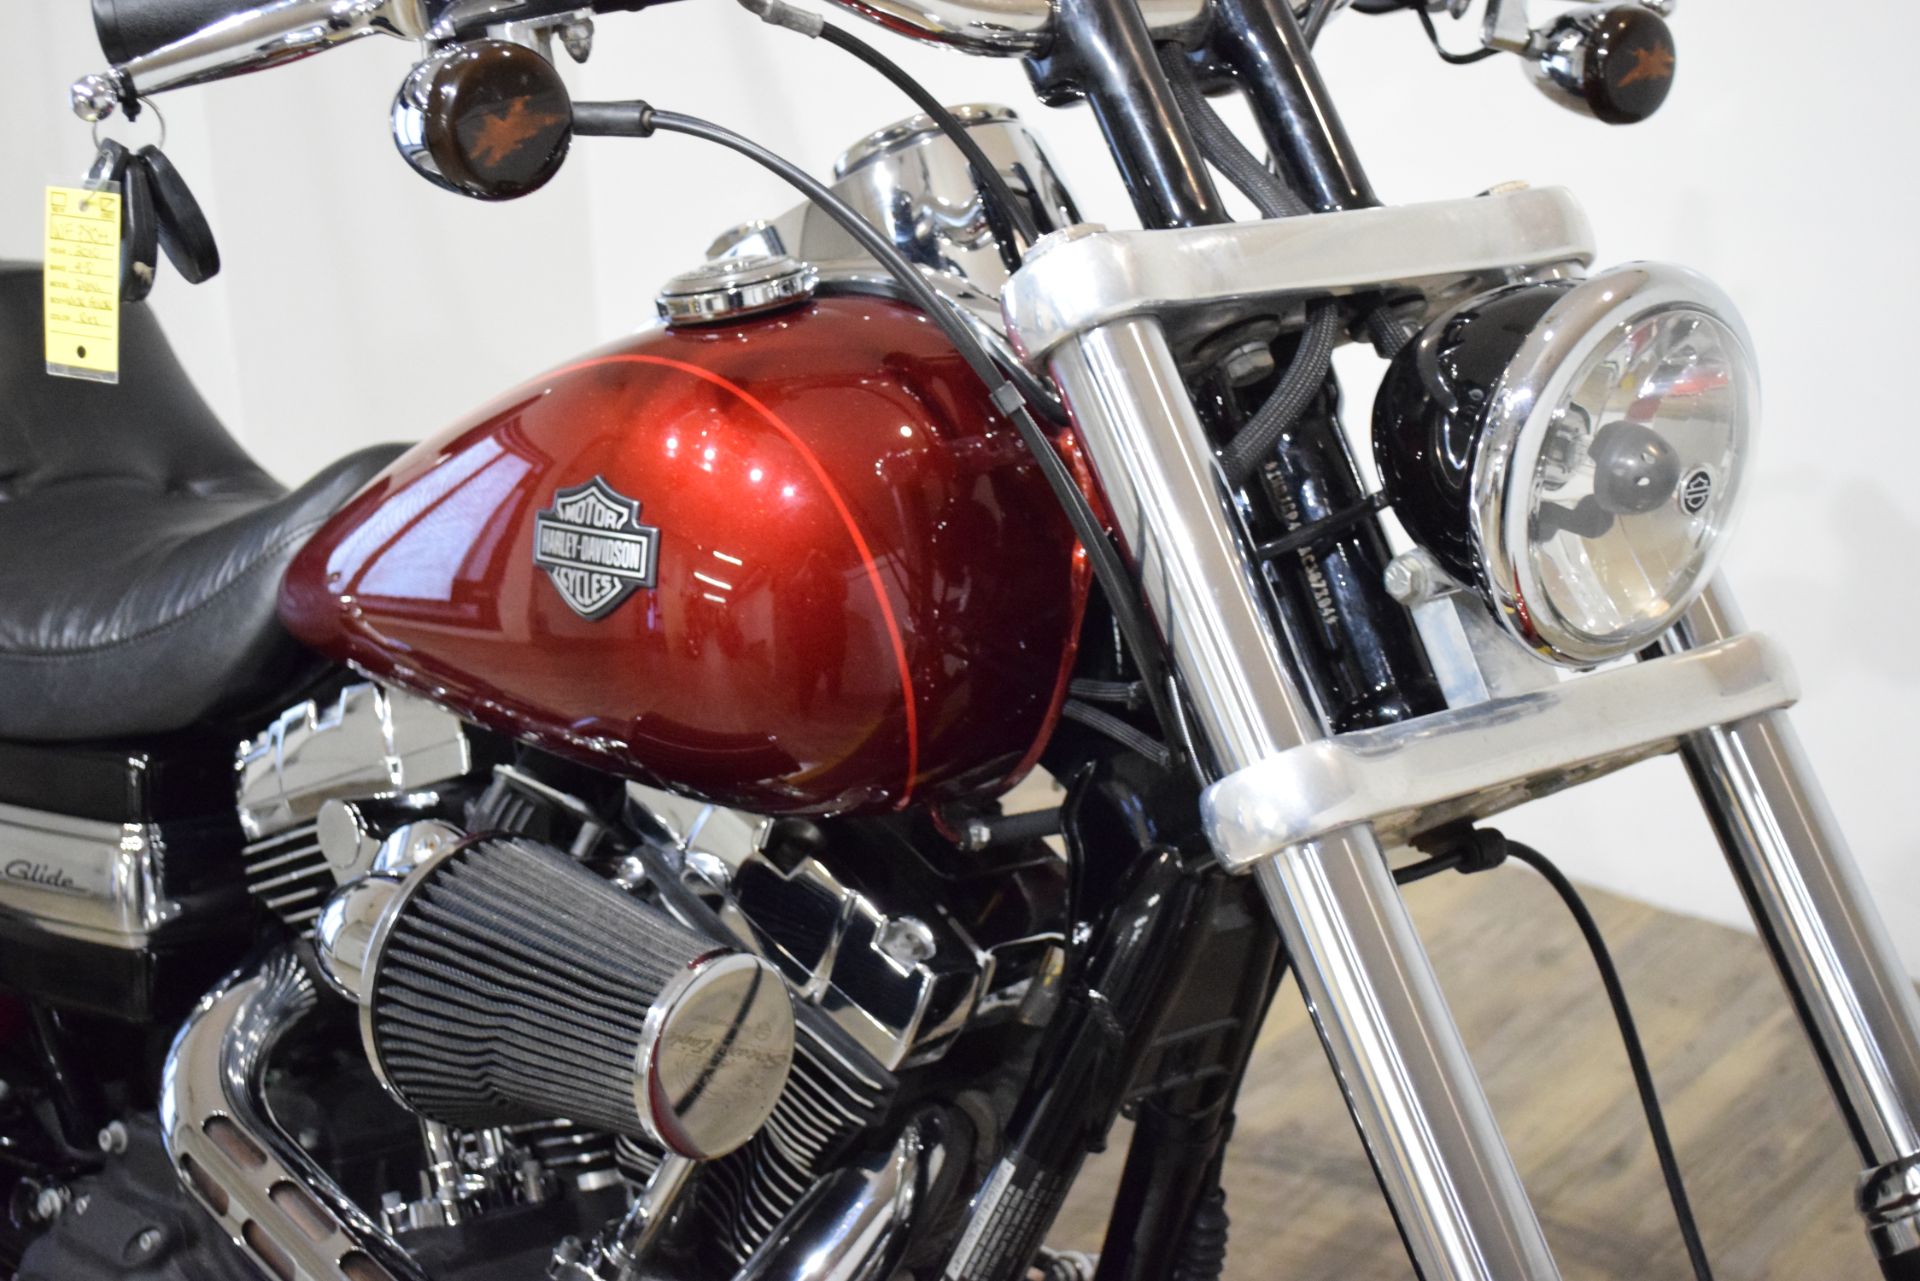 2010 Harley-Davidson Dyna® Wide Glide® in Wauconda, Illinois - Photo 3